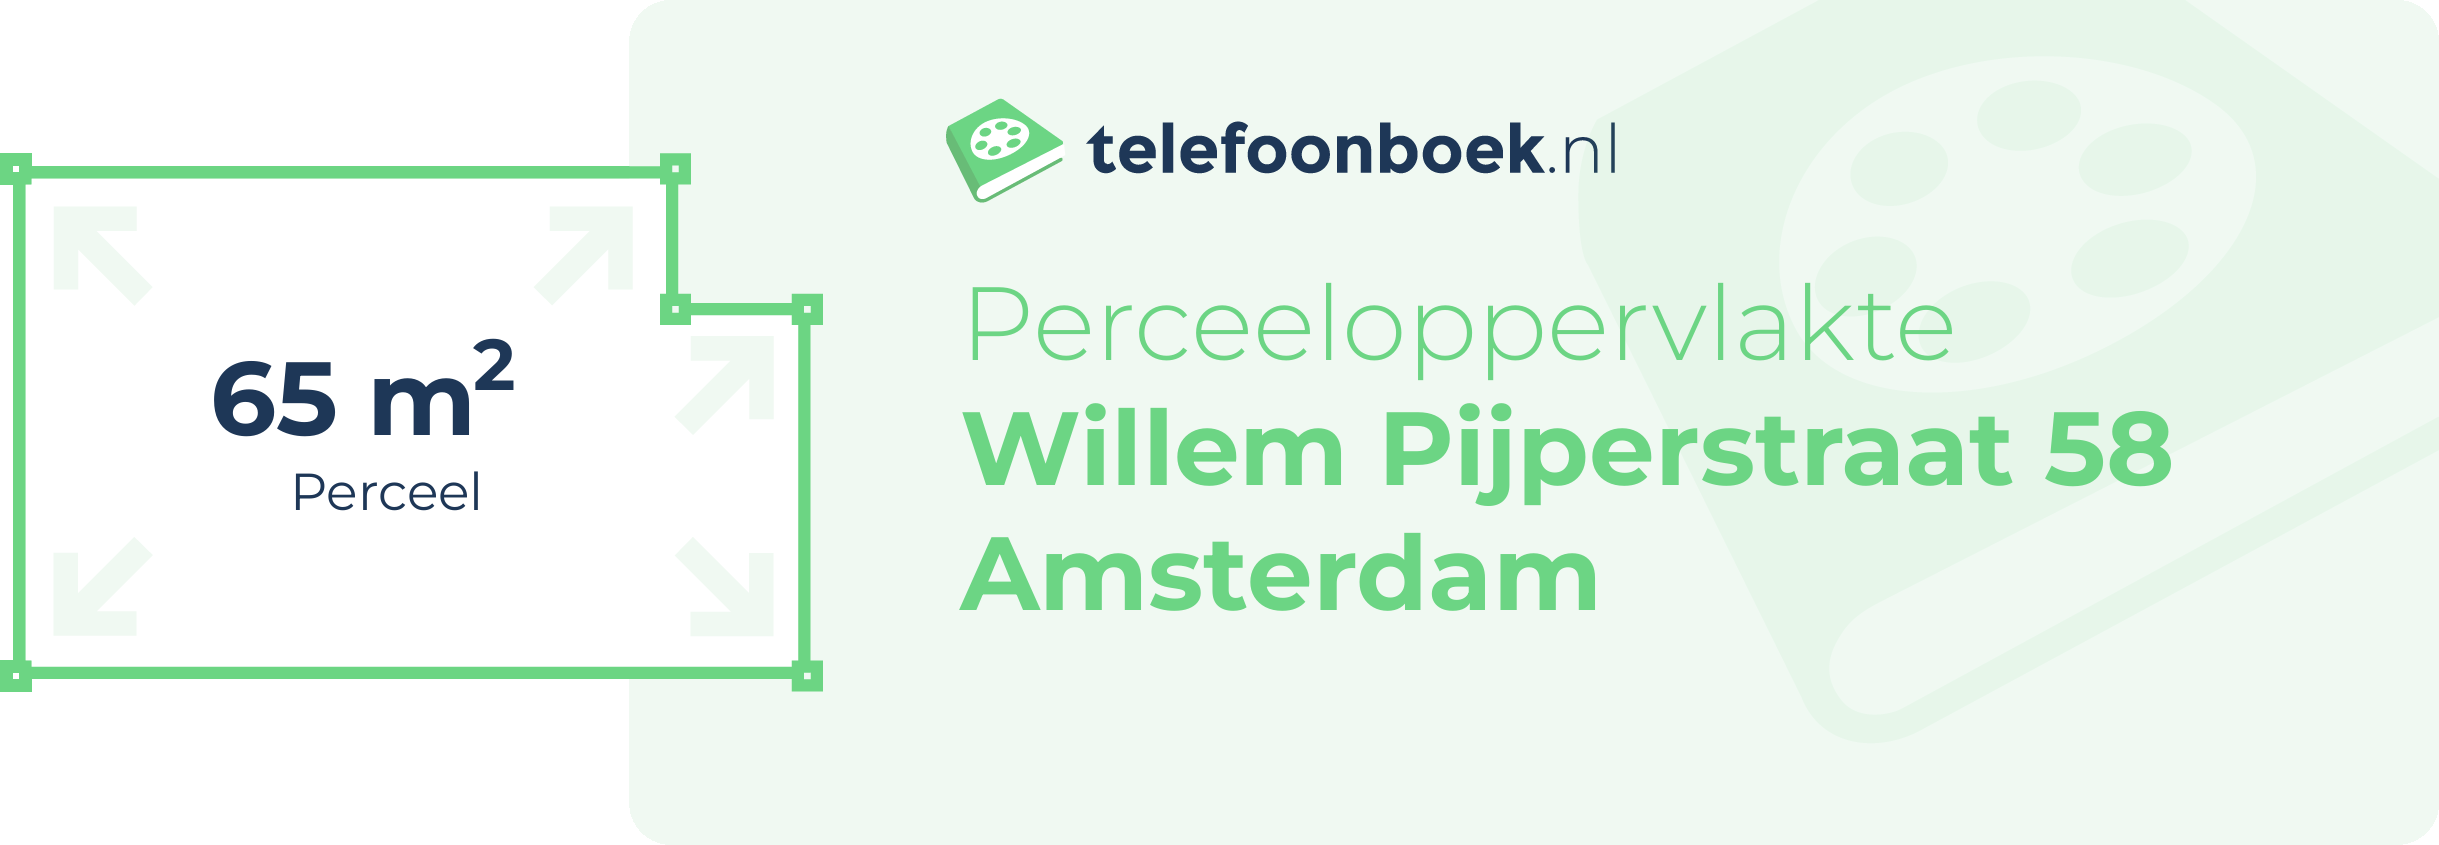 Perceeloppervlakte Willem Pijperstraat 58 Amsterdam